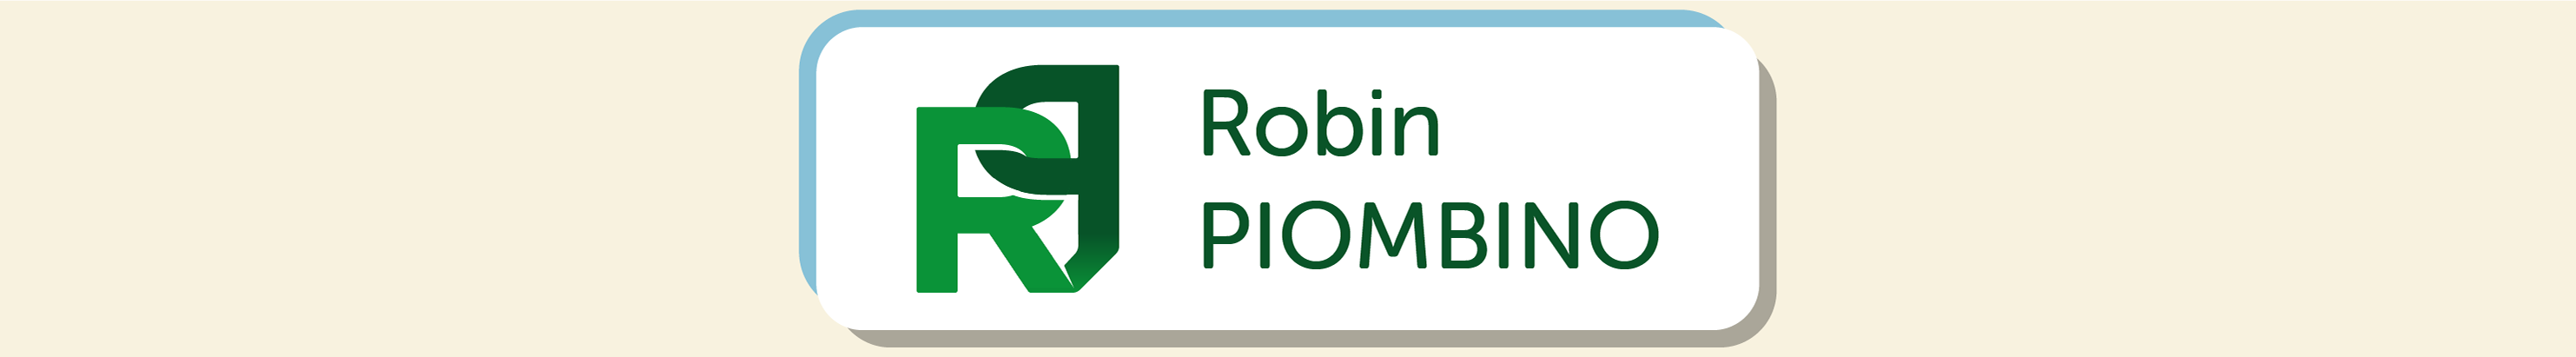 Bannière de profil de Robin PIOMBINO